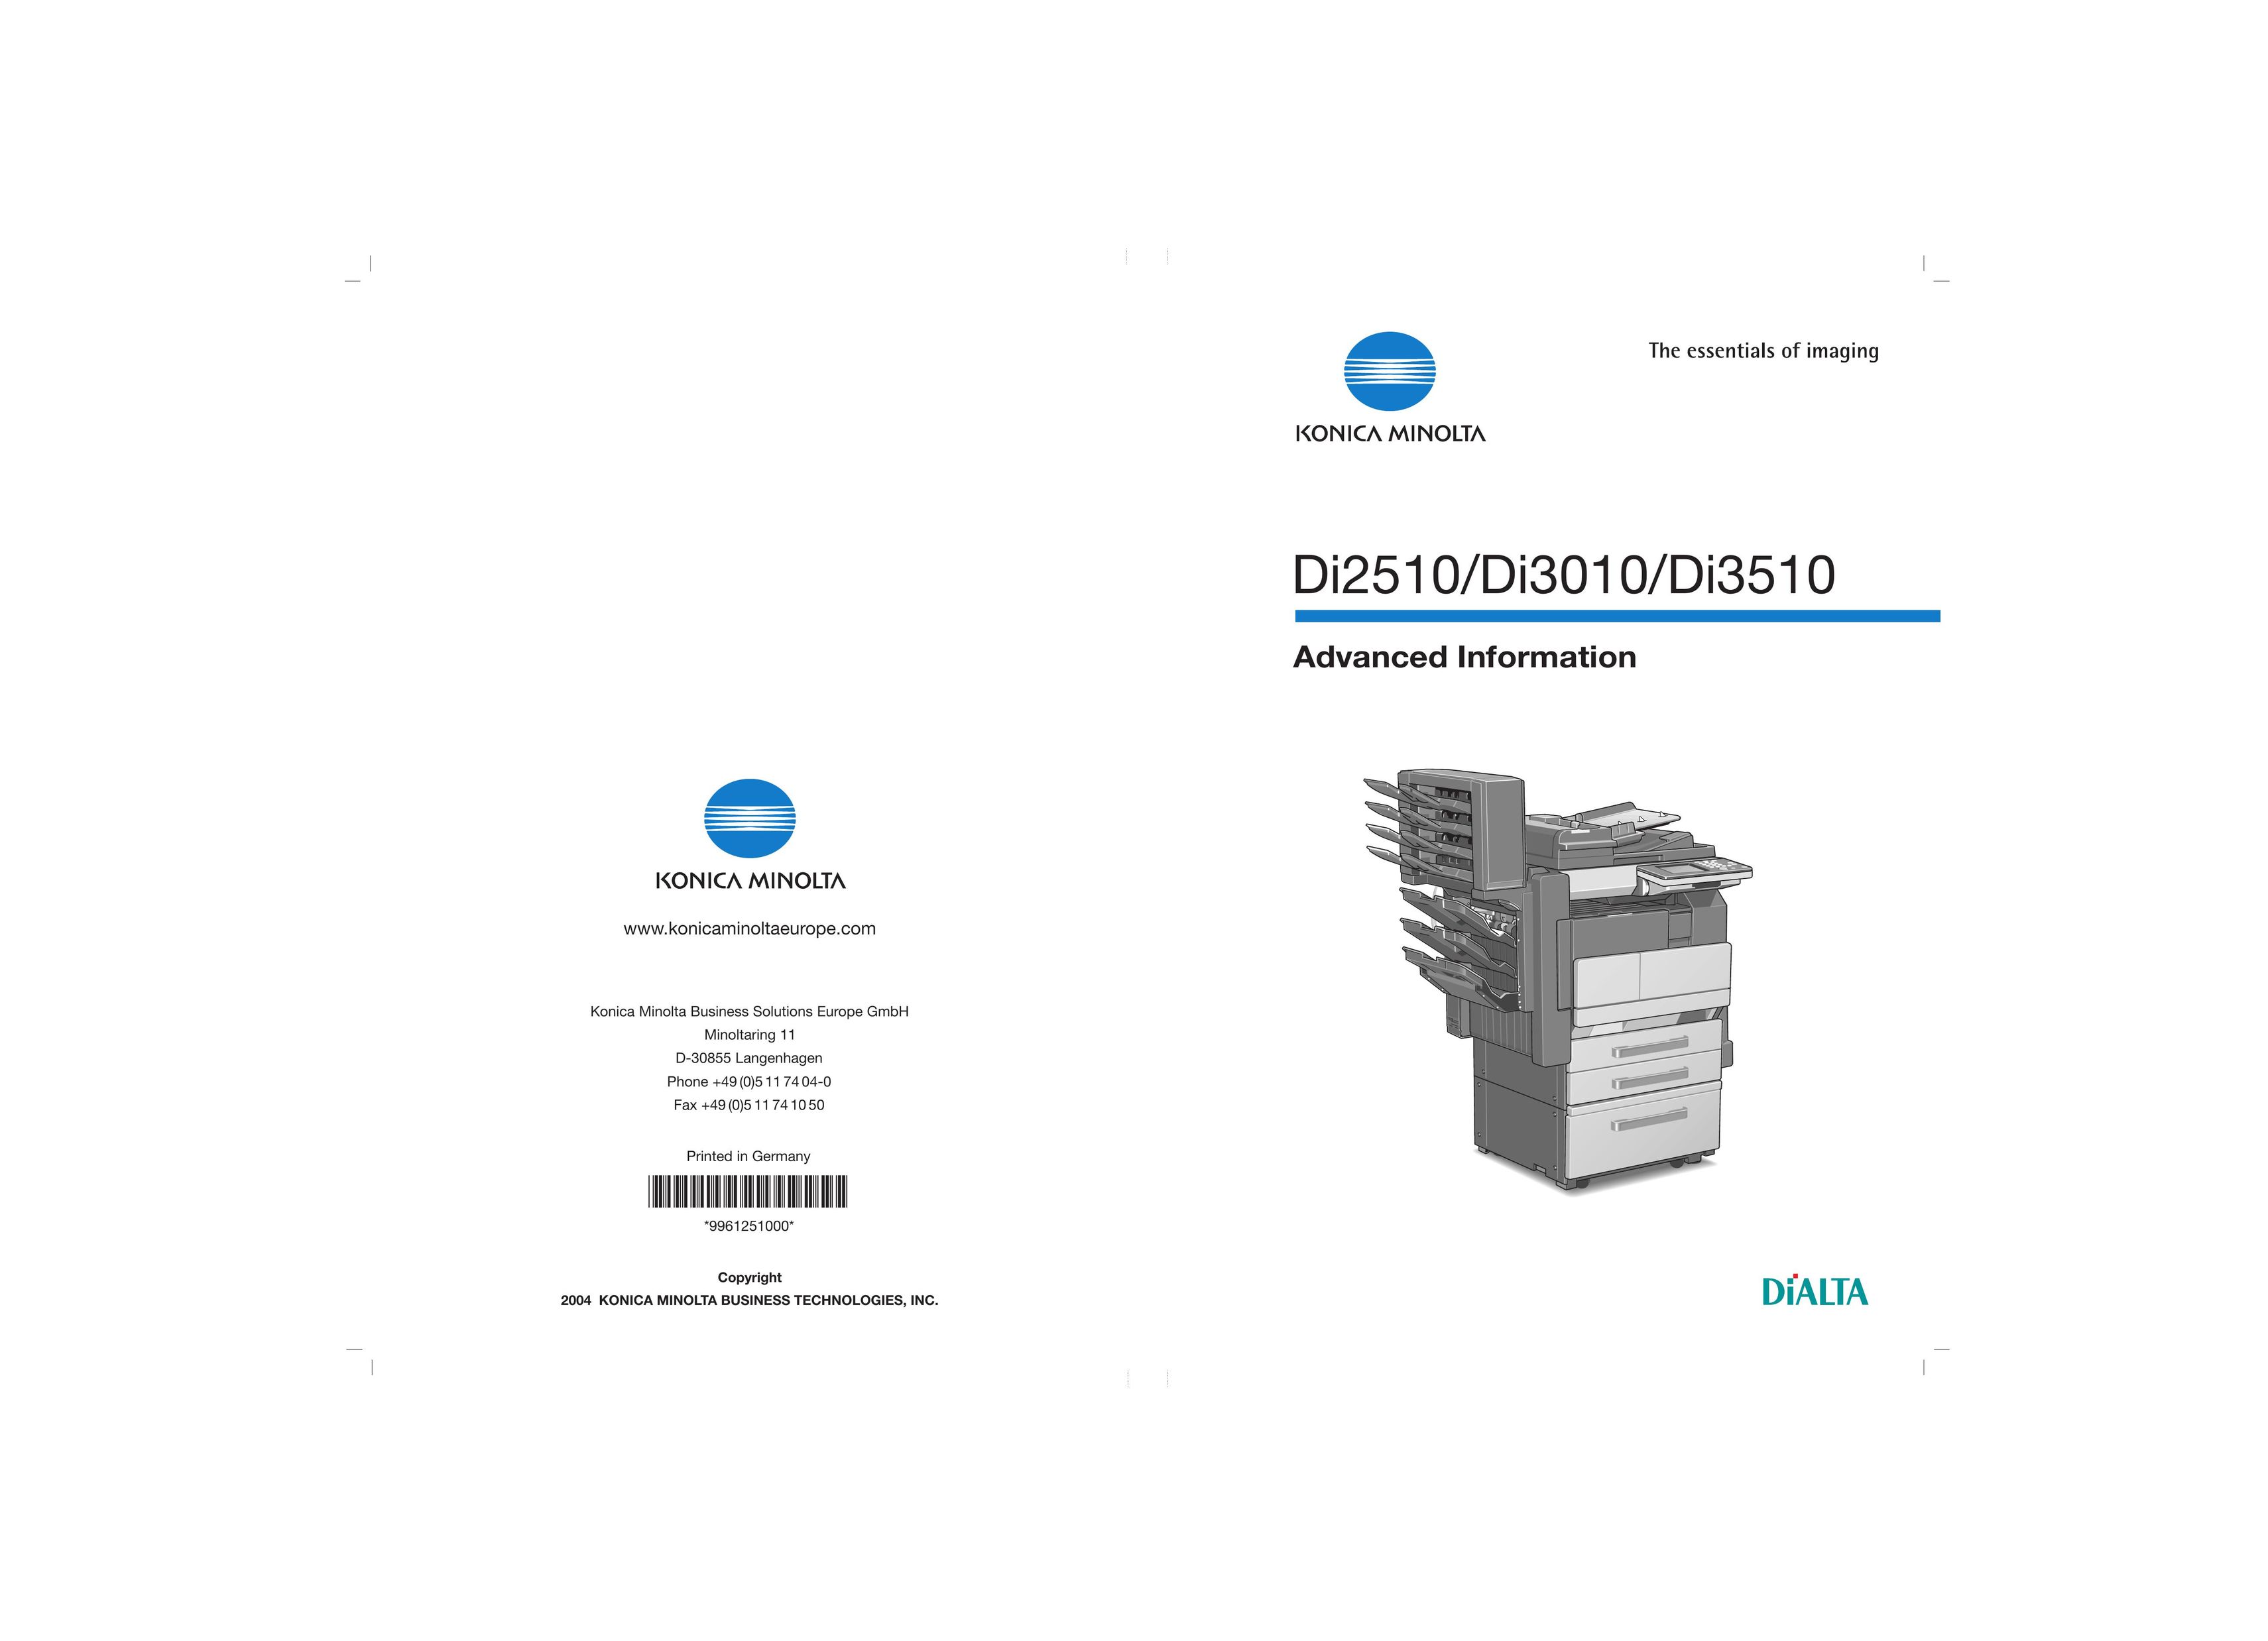 Konica Minolta DI3510 Copier User Manual